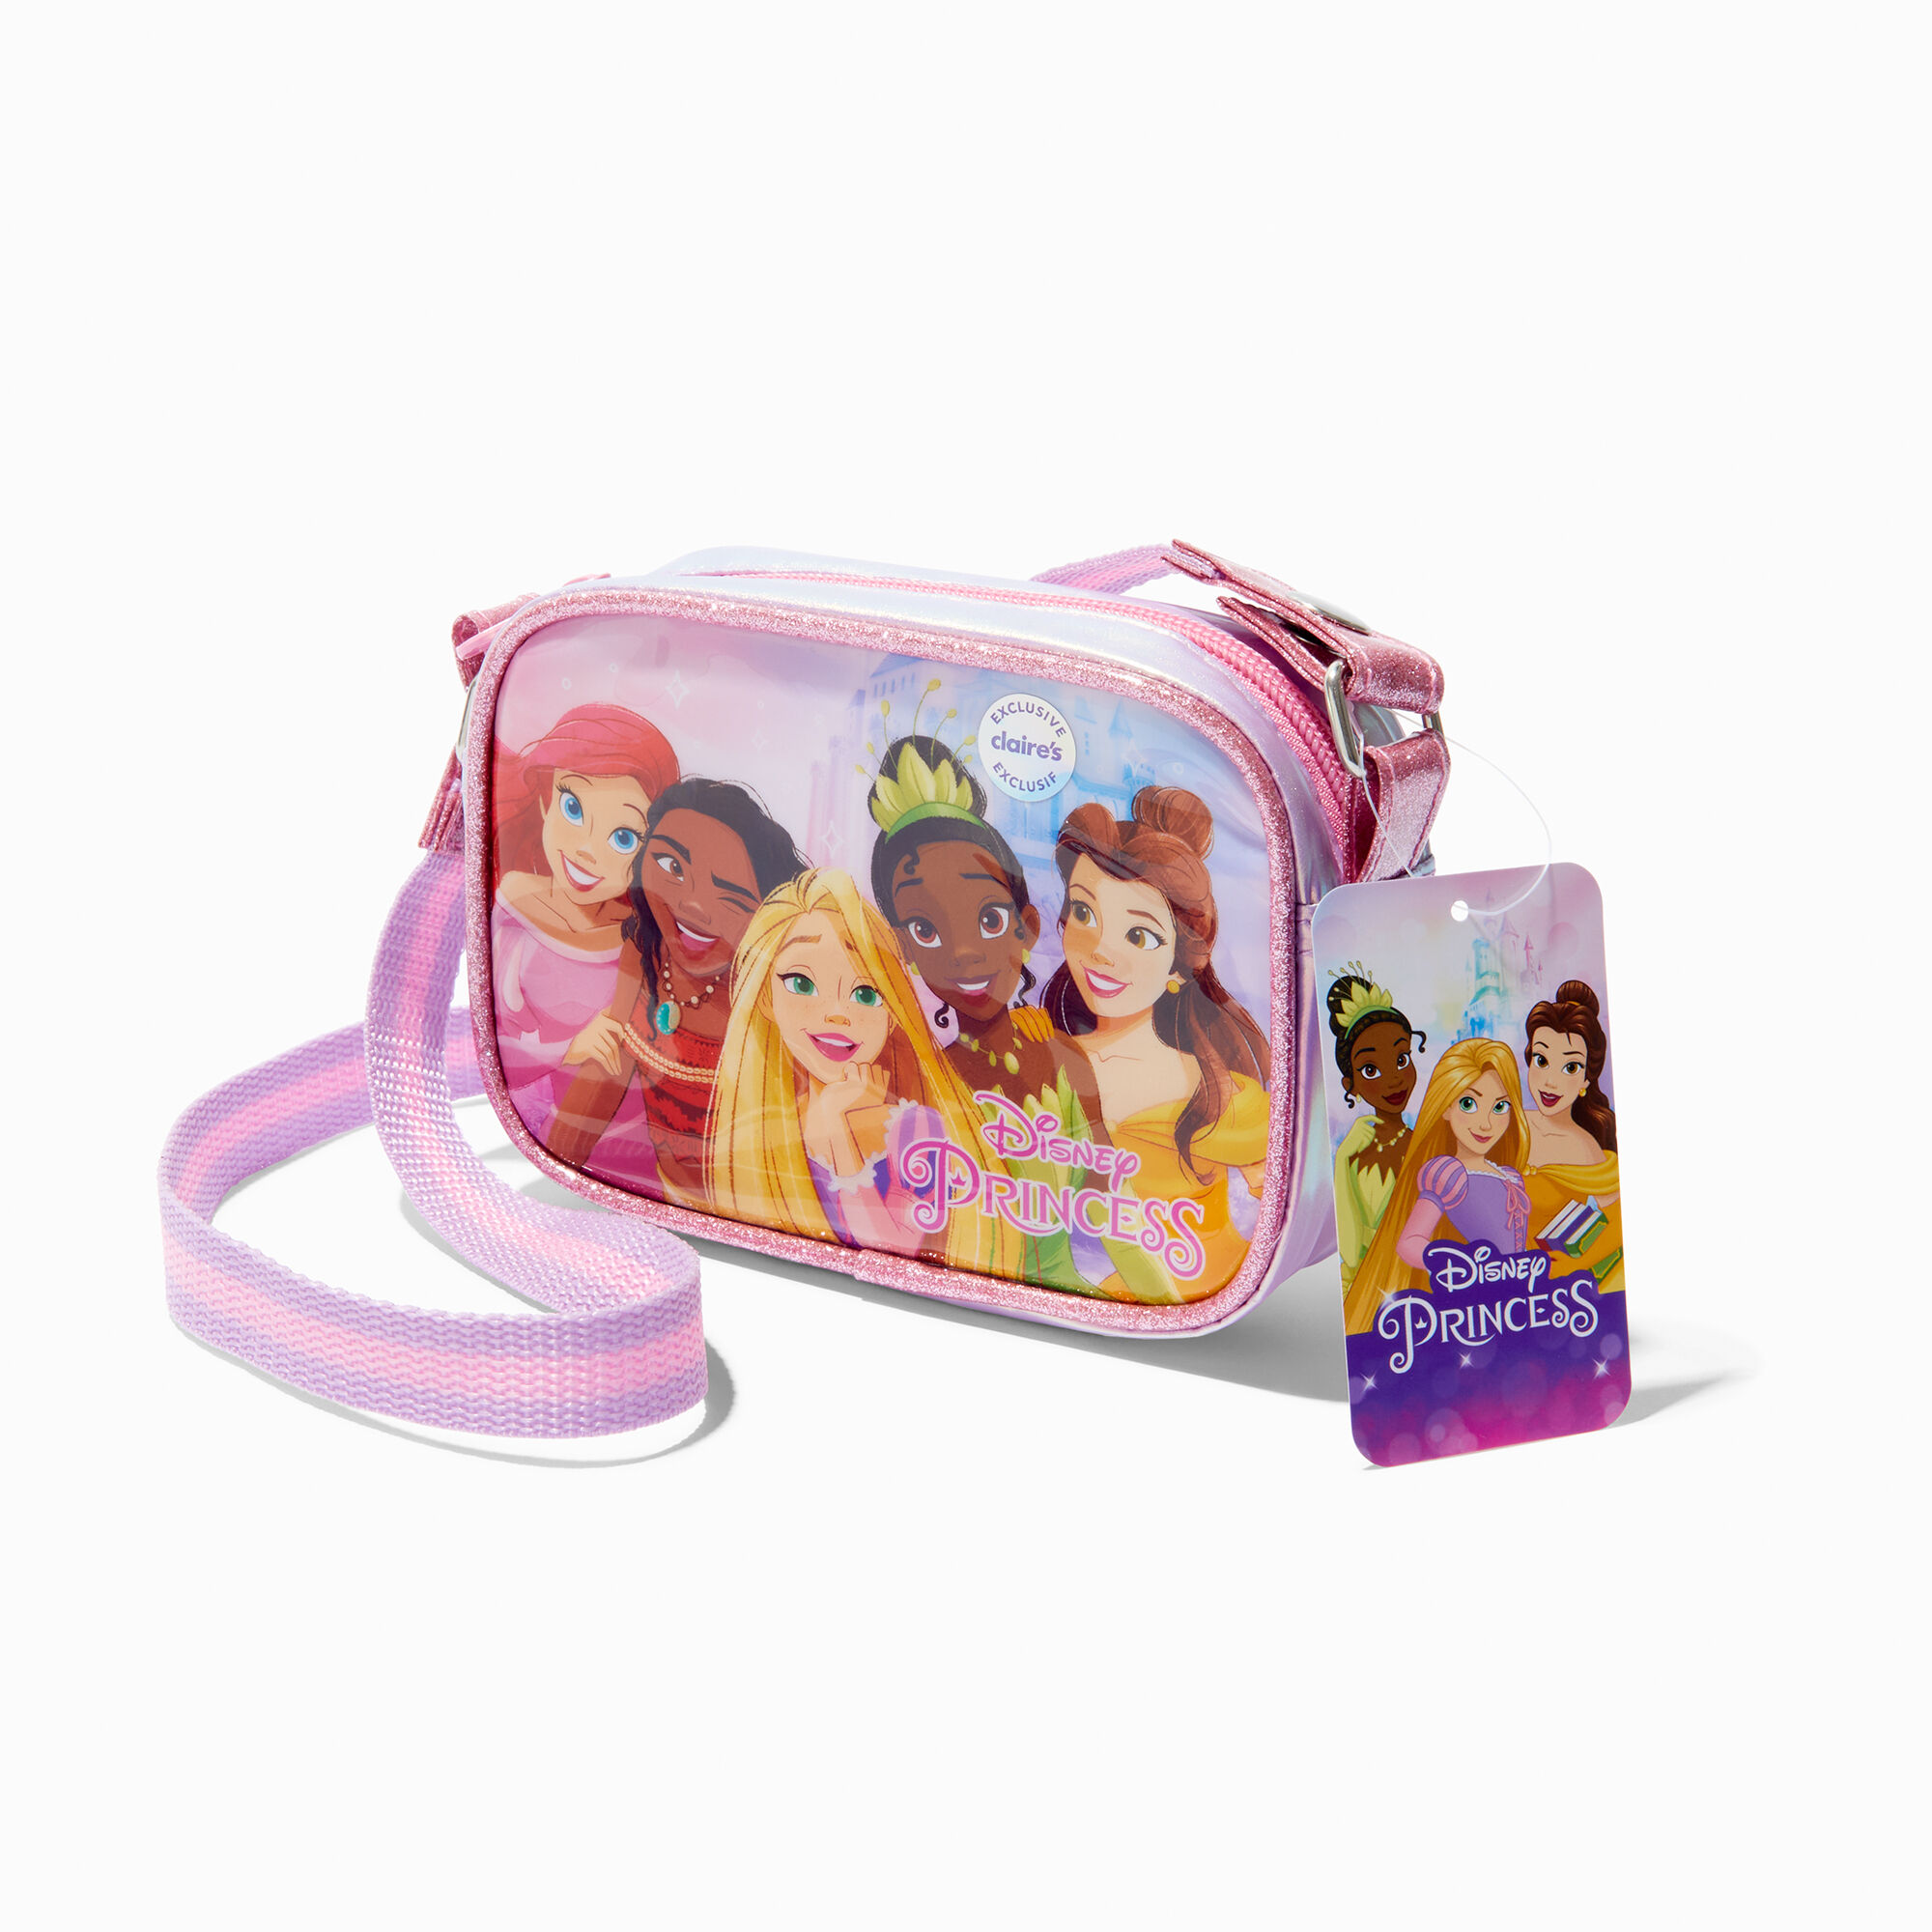 View Claires Exclusive Disney Princess Mini Handbag Pink information